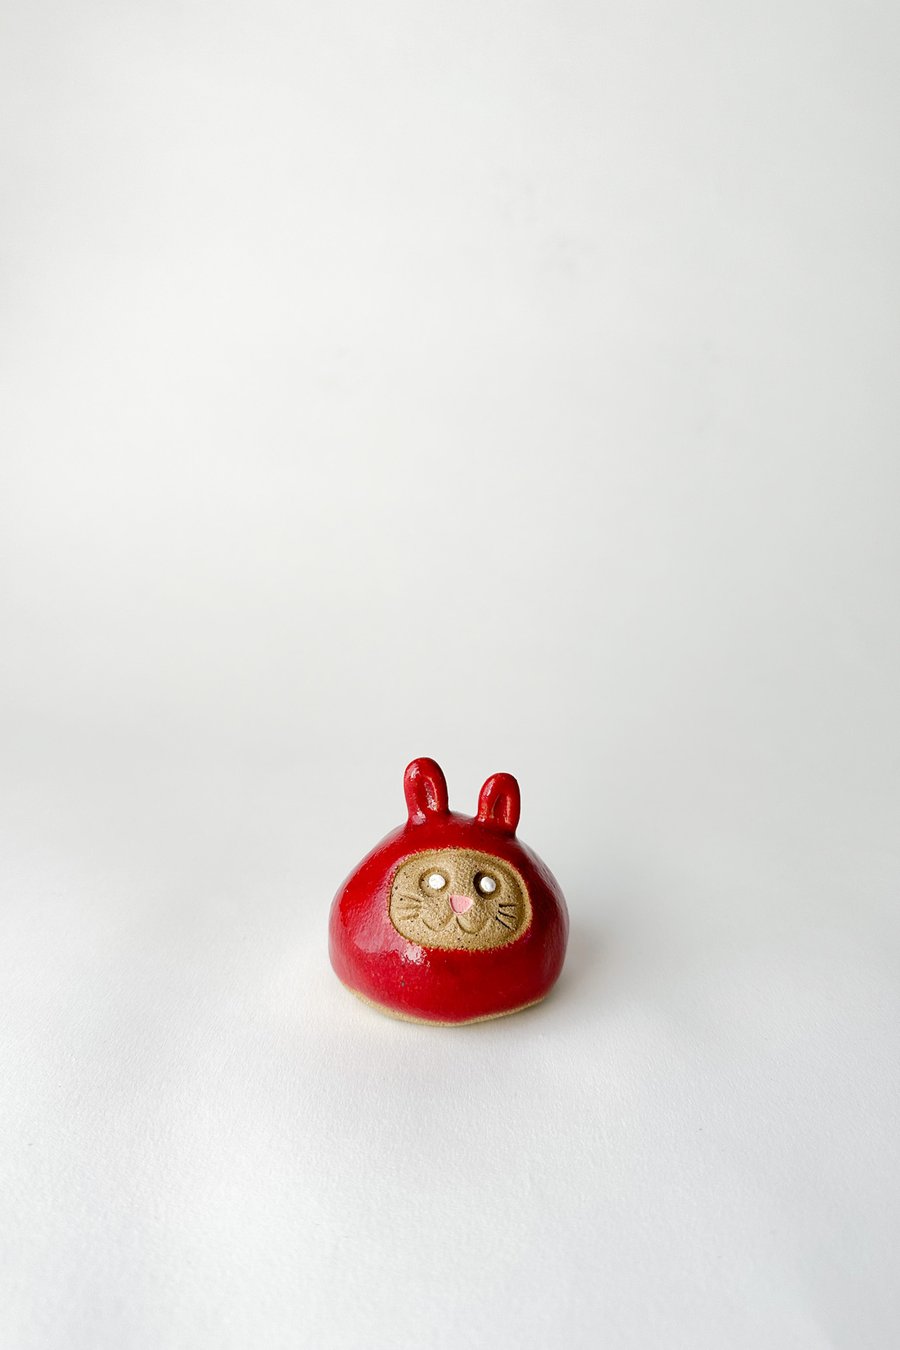 Image of Lunar New Year Bunny Daruma Wishing doll - Dark Red Gloss